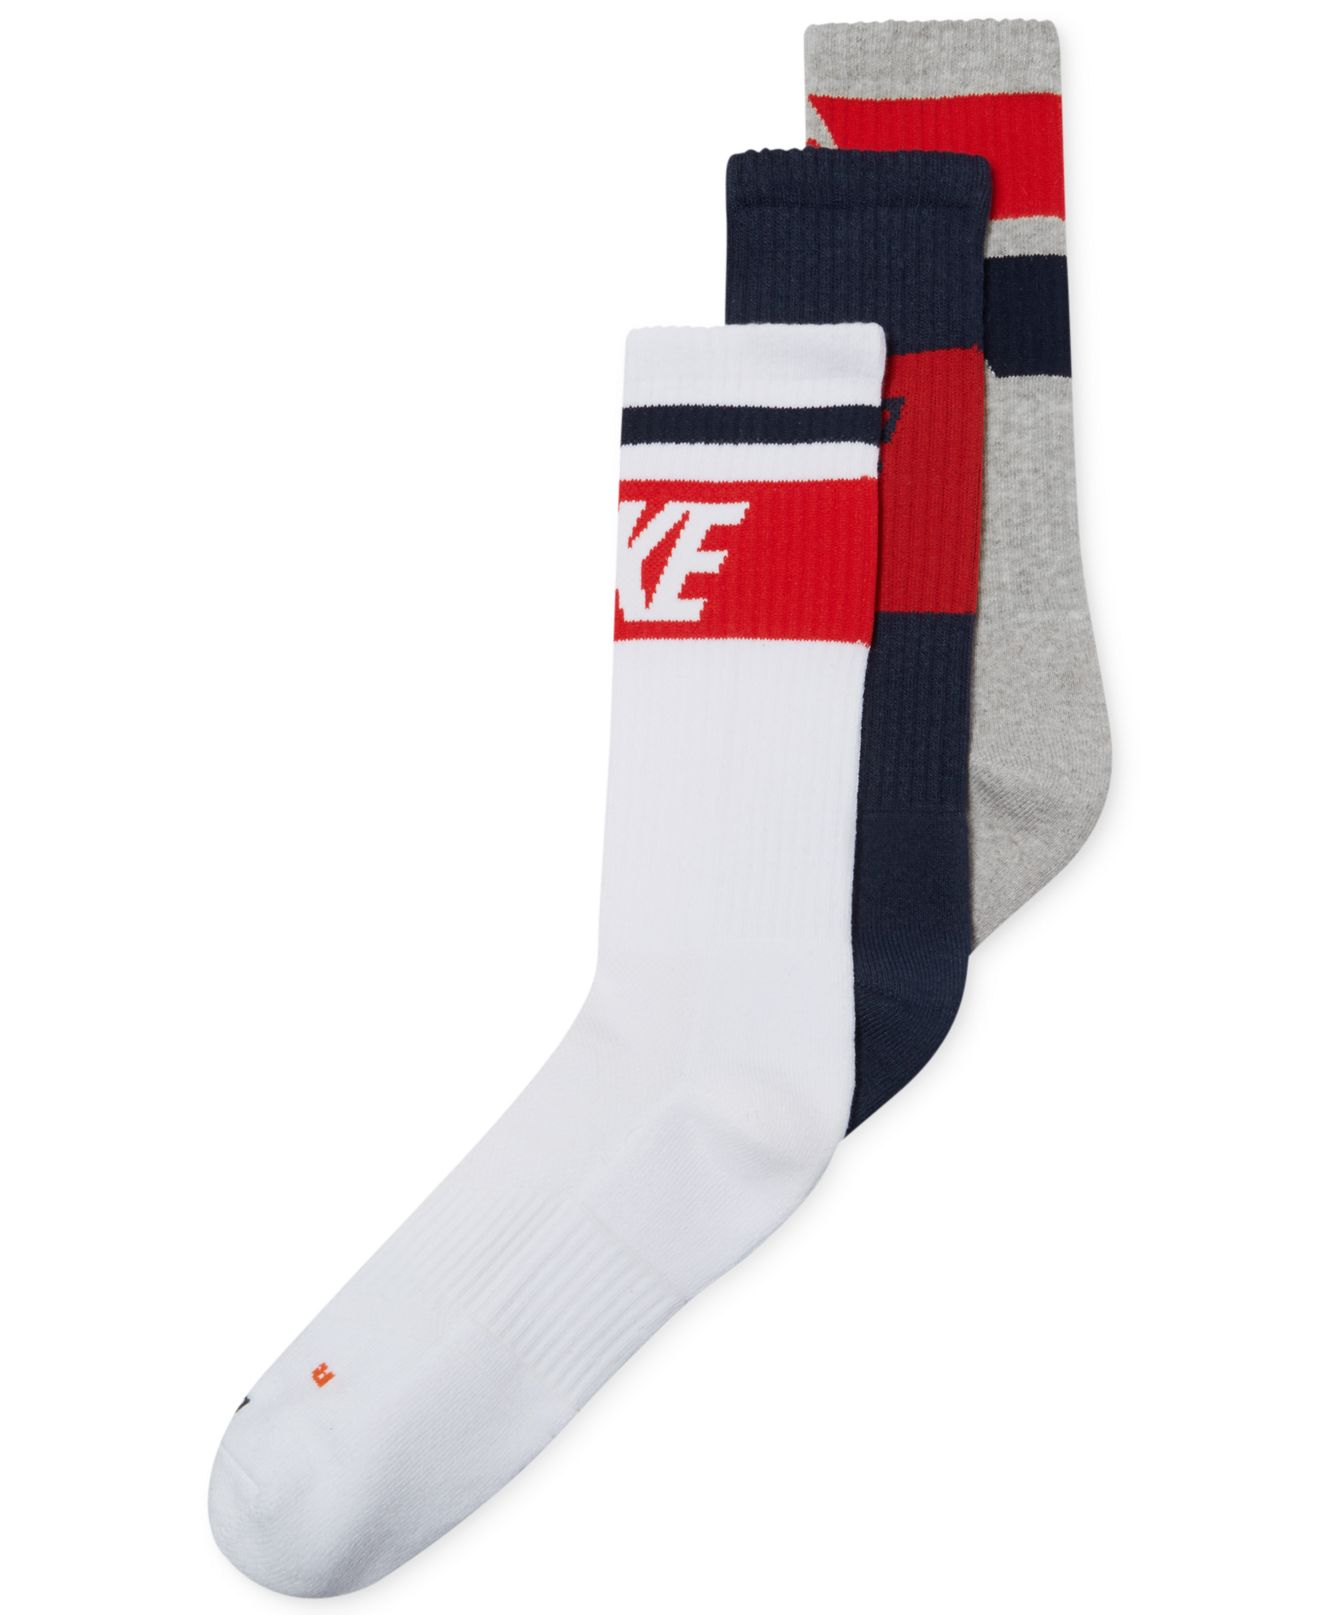 Lyst - Nike Men's Dri-fit Fly Rise Performance Crew Socks 3-pack in ...